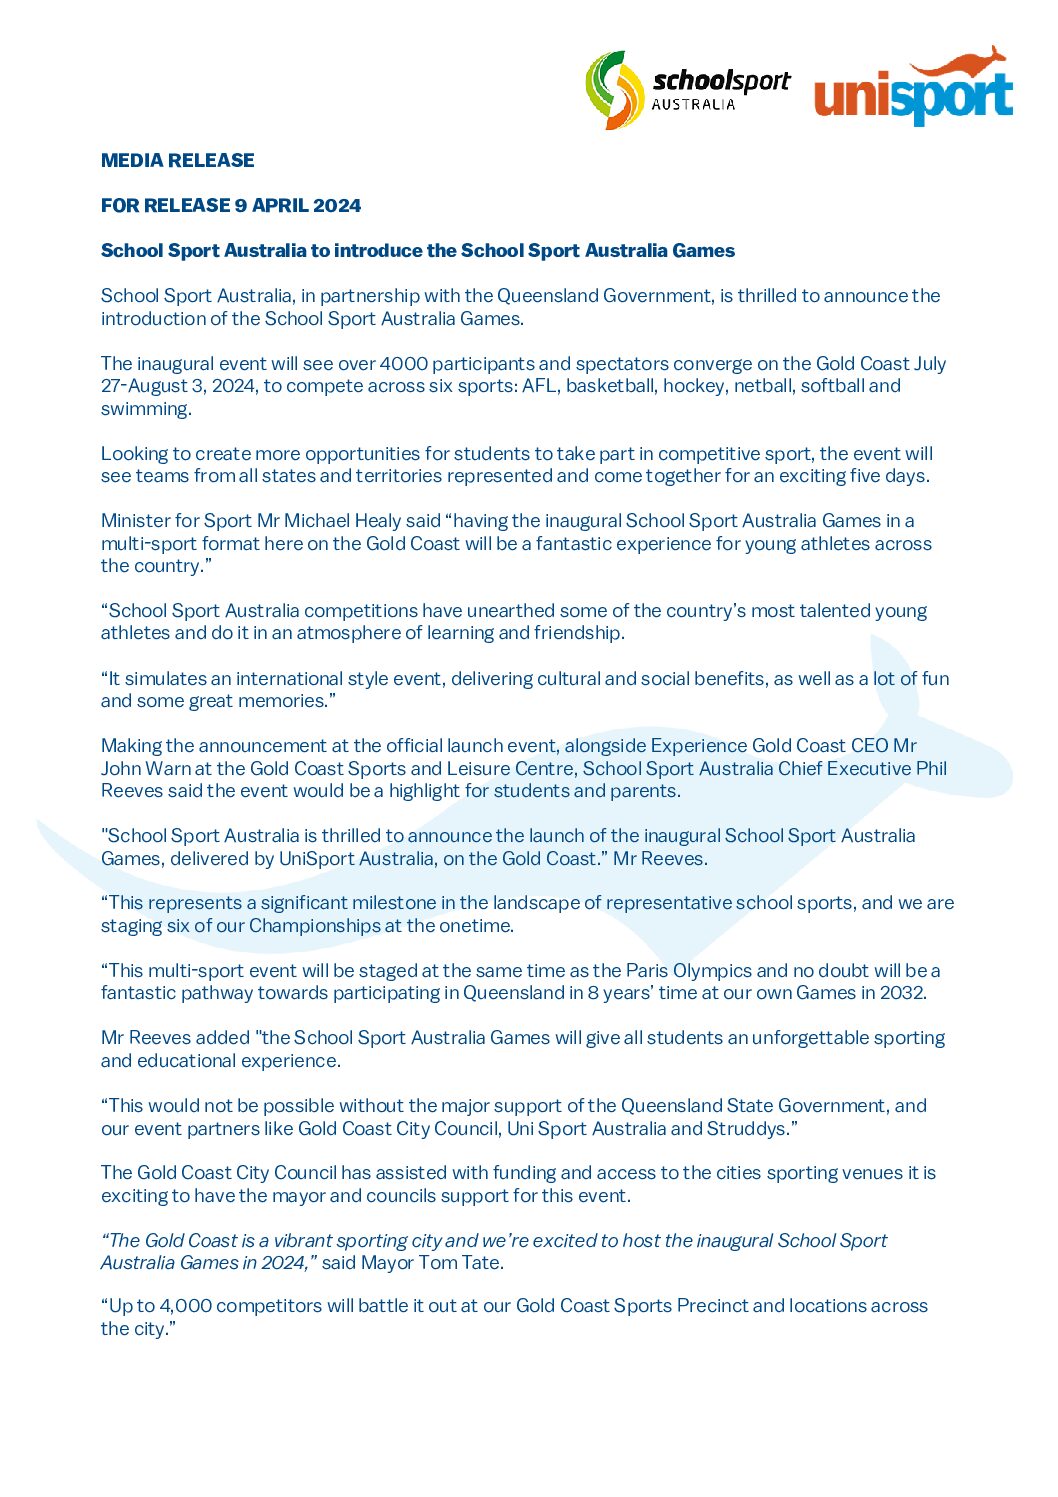 School Sport Australia Press release – 9 April 2024